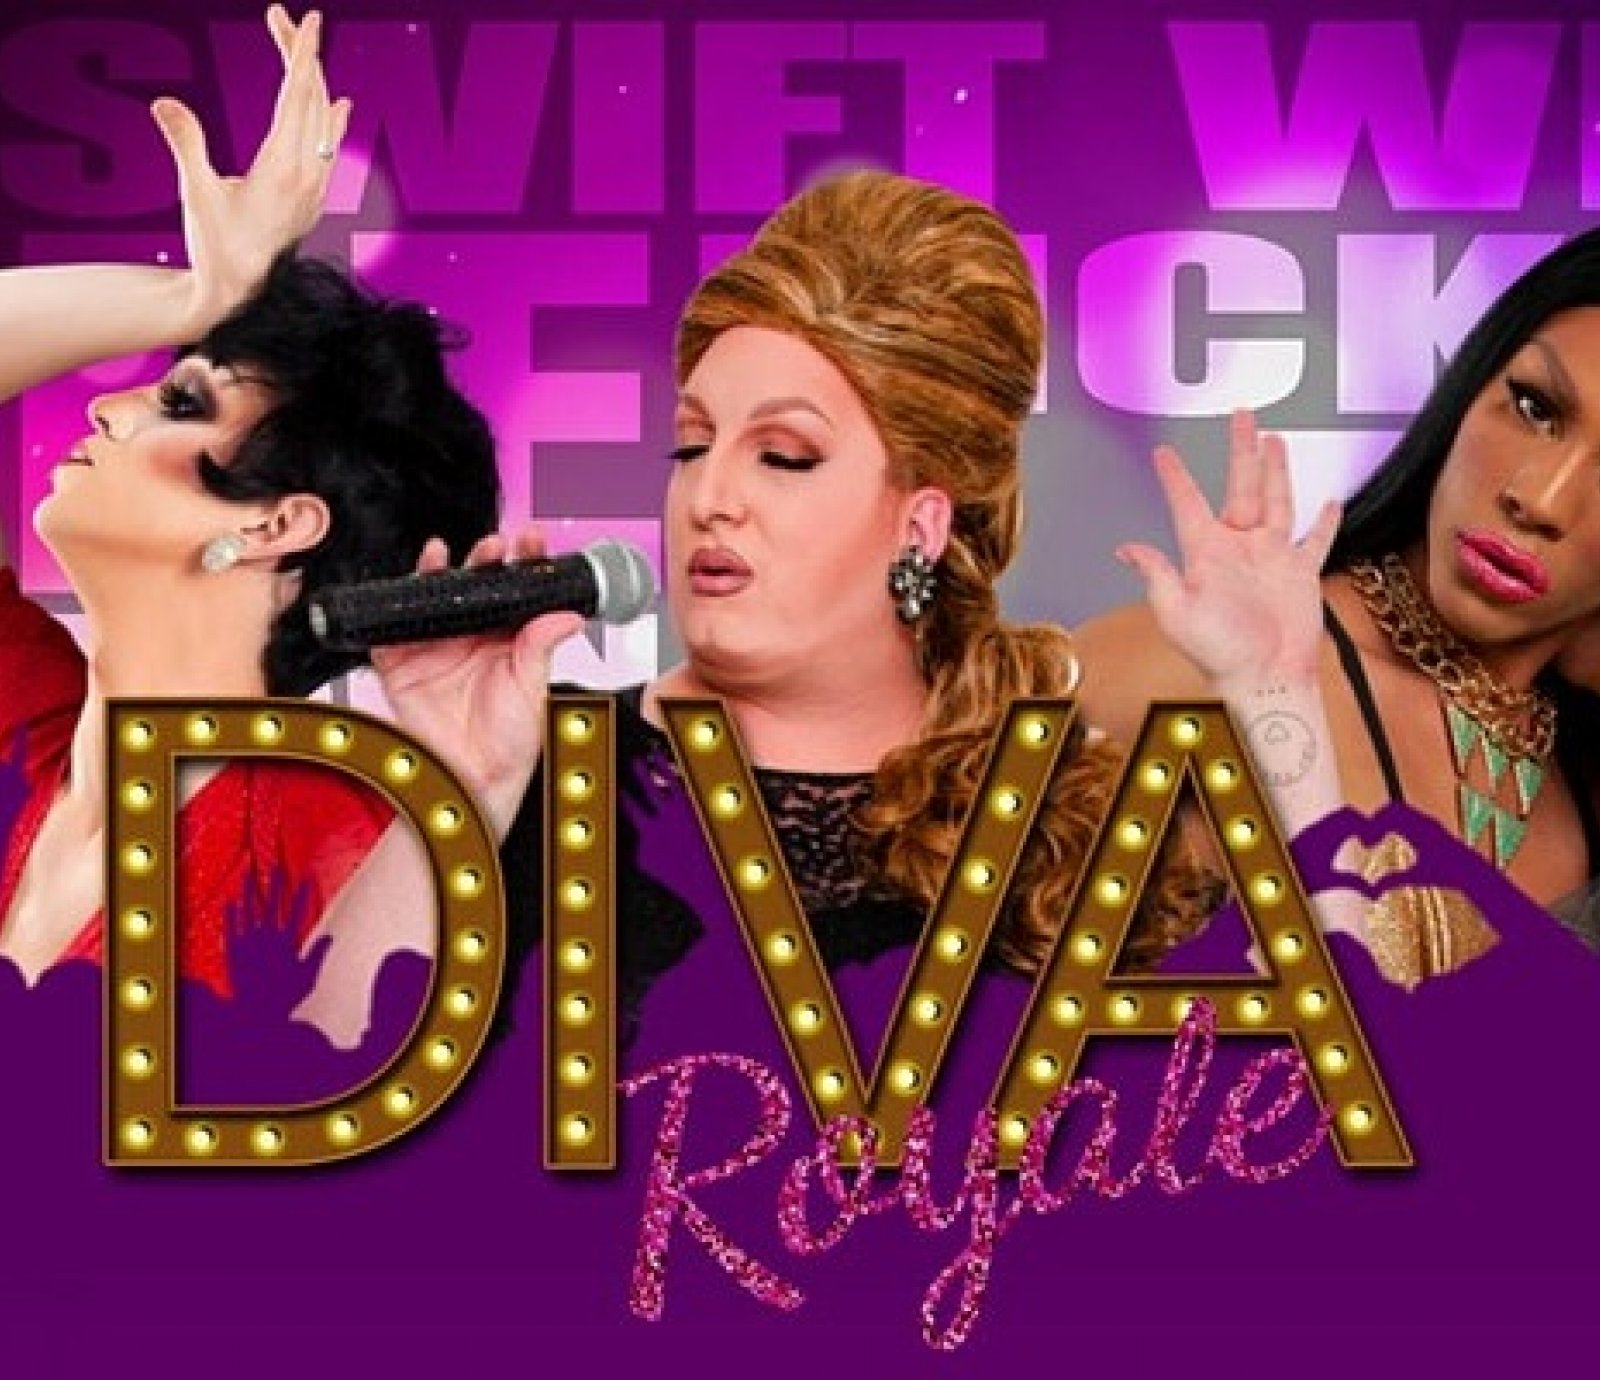 Diva Royale Drag Queen Show - Nashville